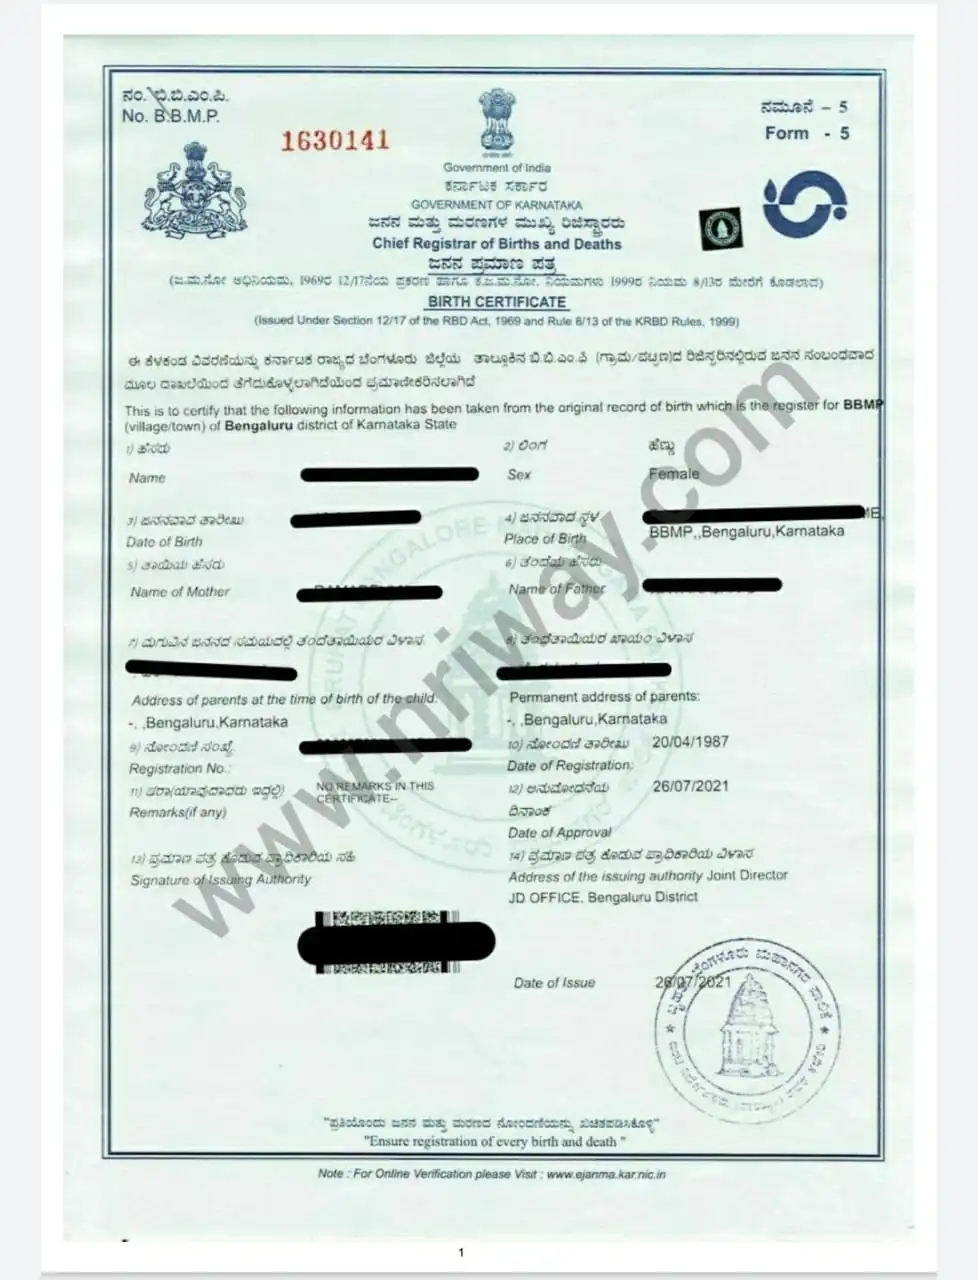 Birth certificate from Bengaluru or Bangalore